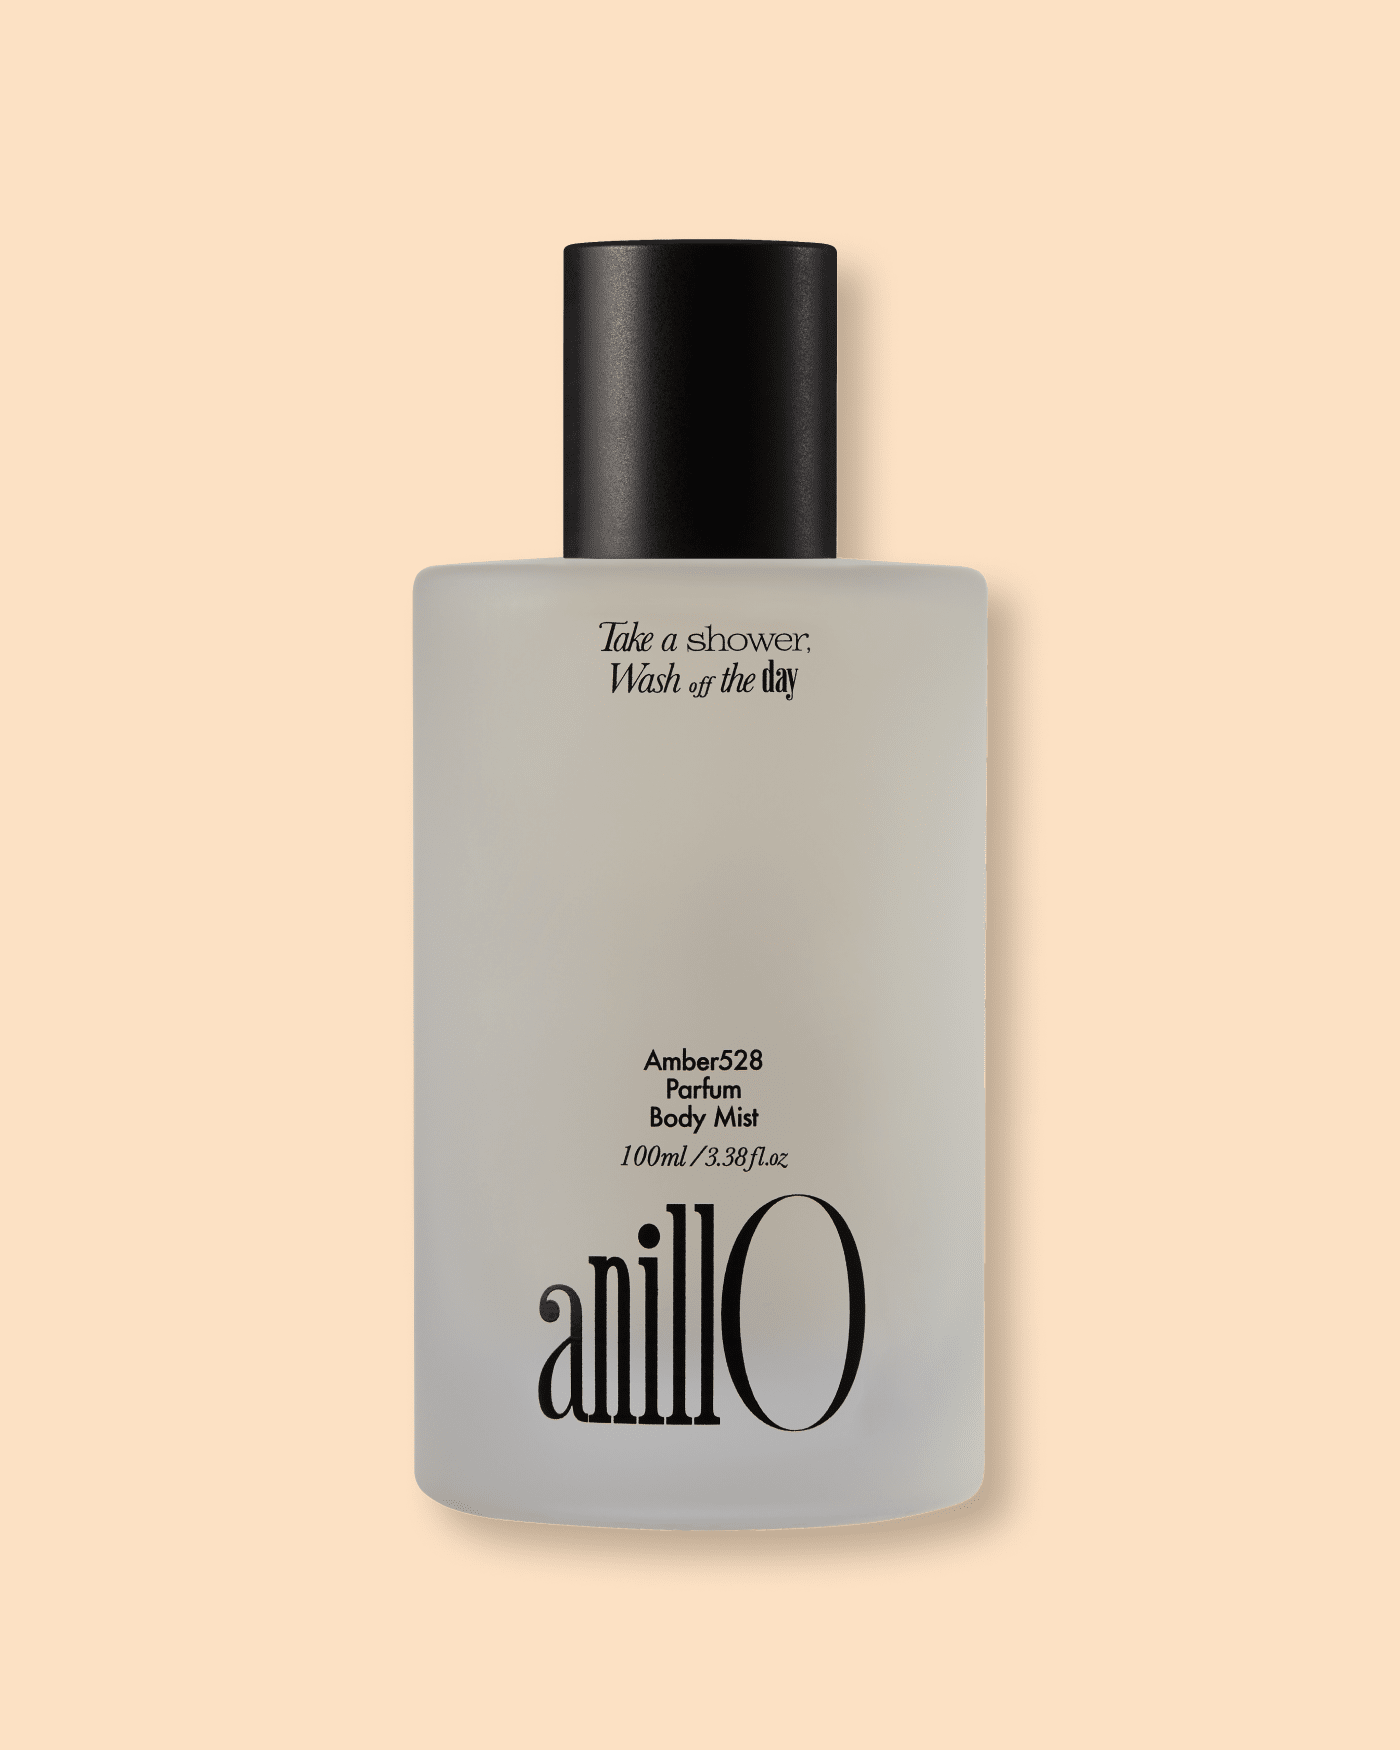 Amber528 Parfum Body Mist Anillo 